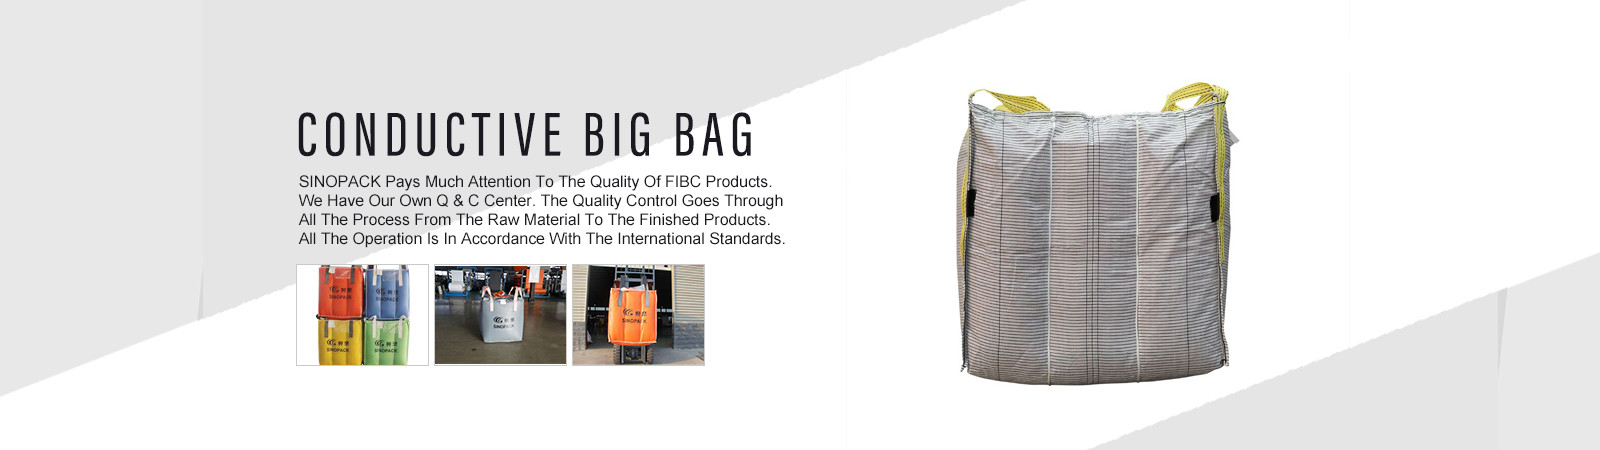 کیفیت Big bag FIBC کارخانه